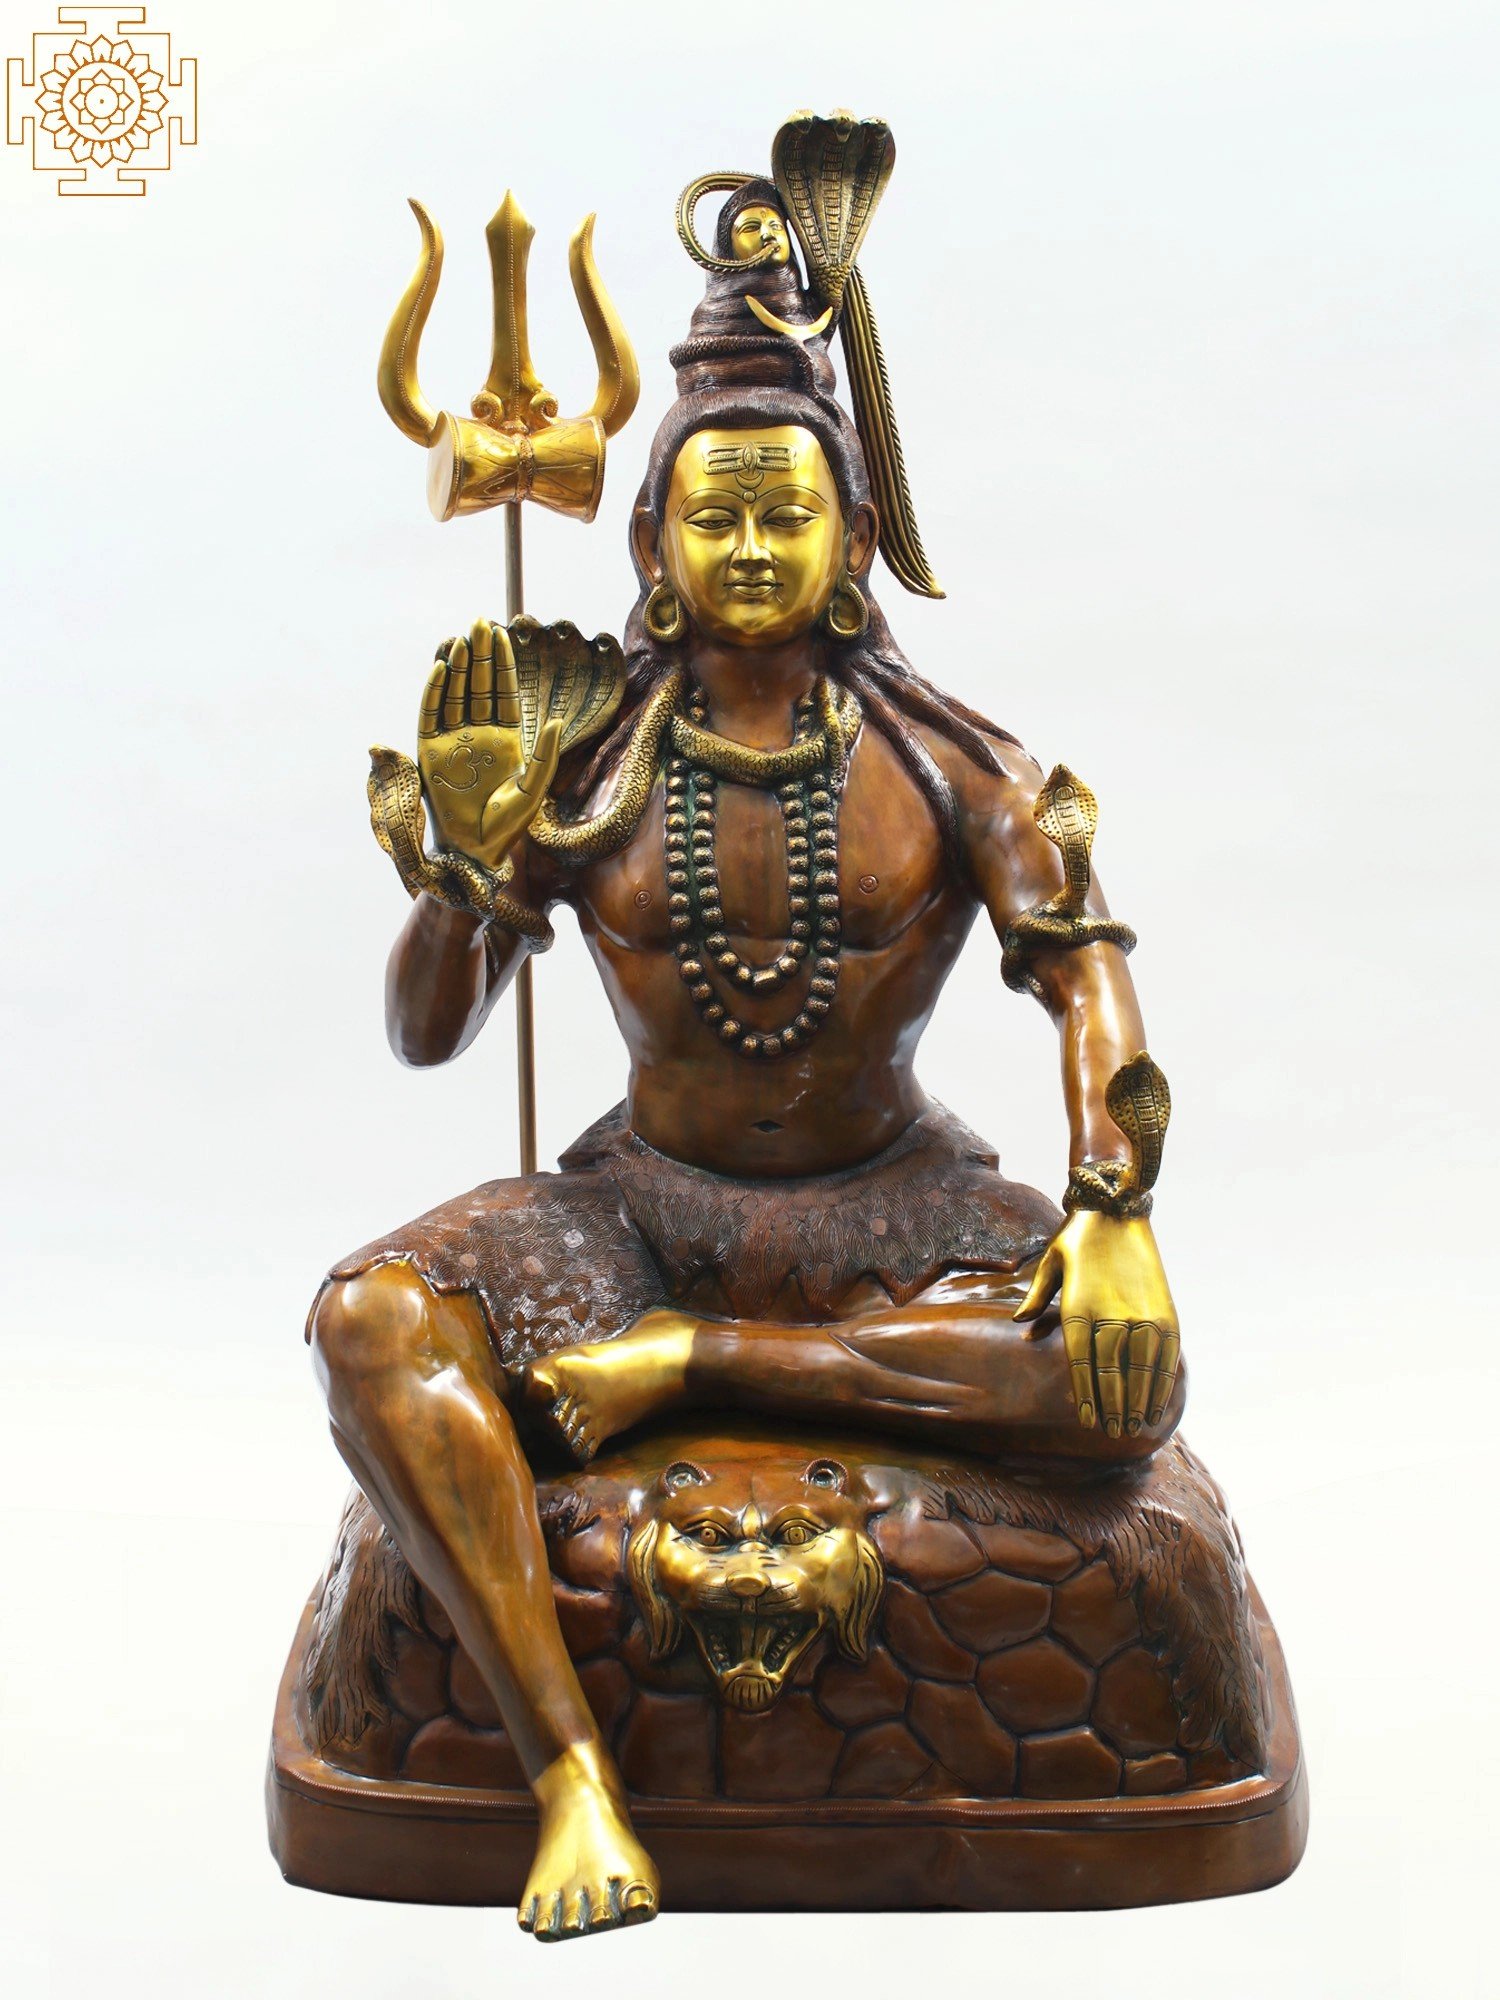 https://cdn.exoticindia.com/images/products/original/sculptures-2019/zeq008-doublechola.jpg